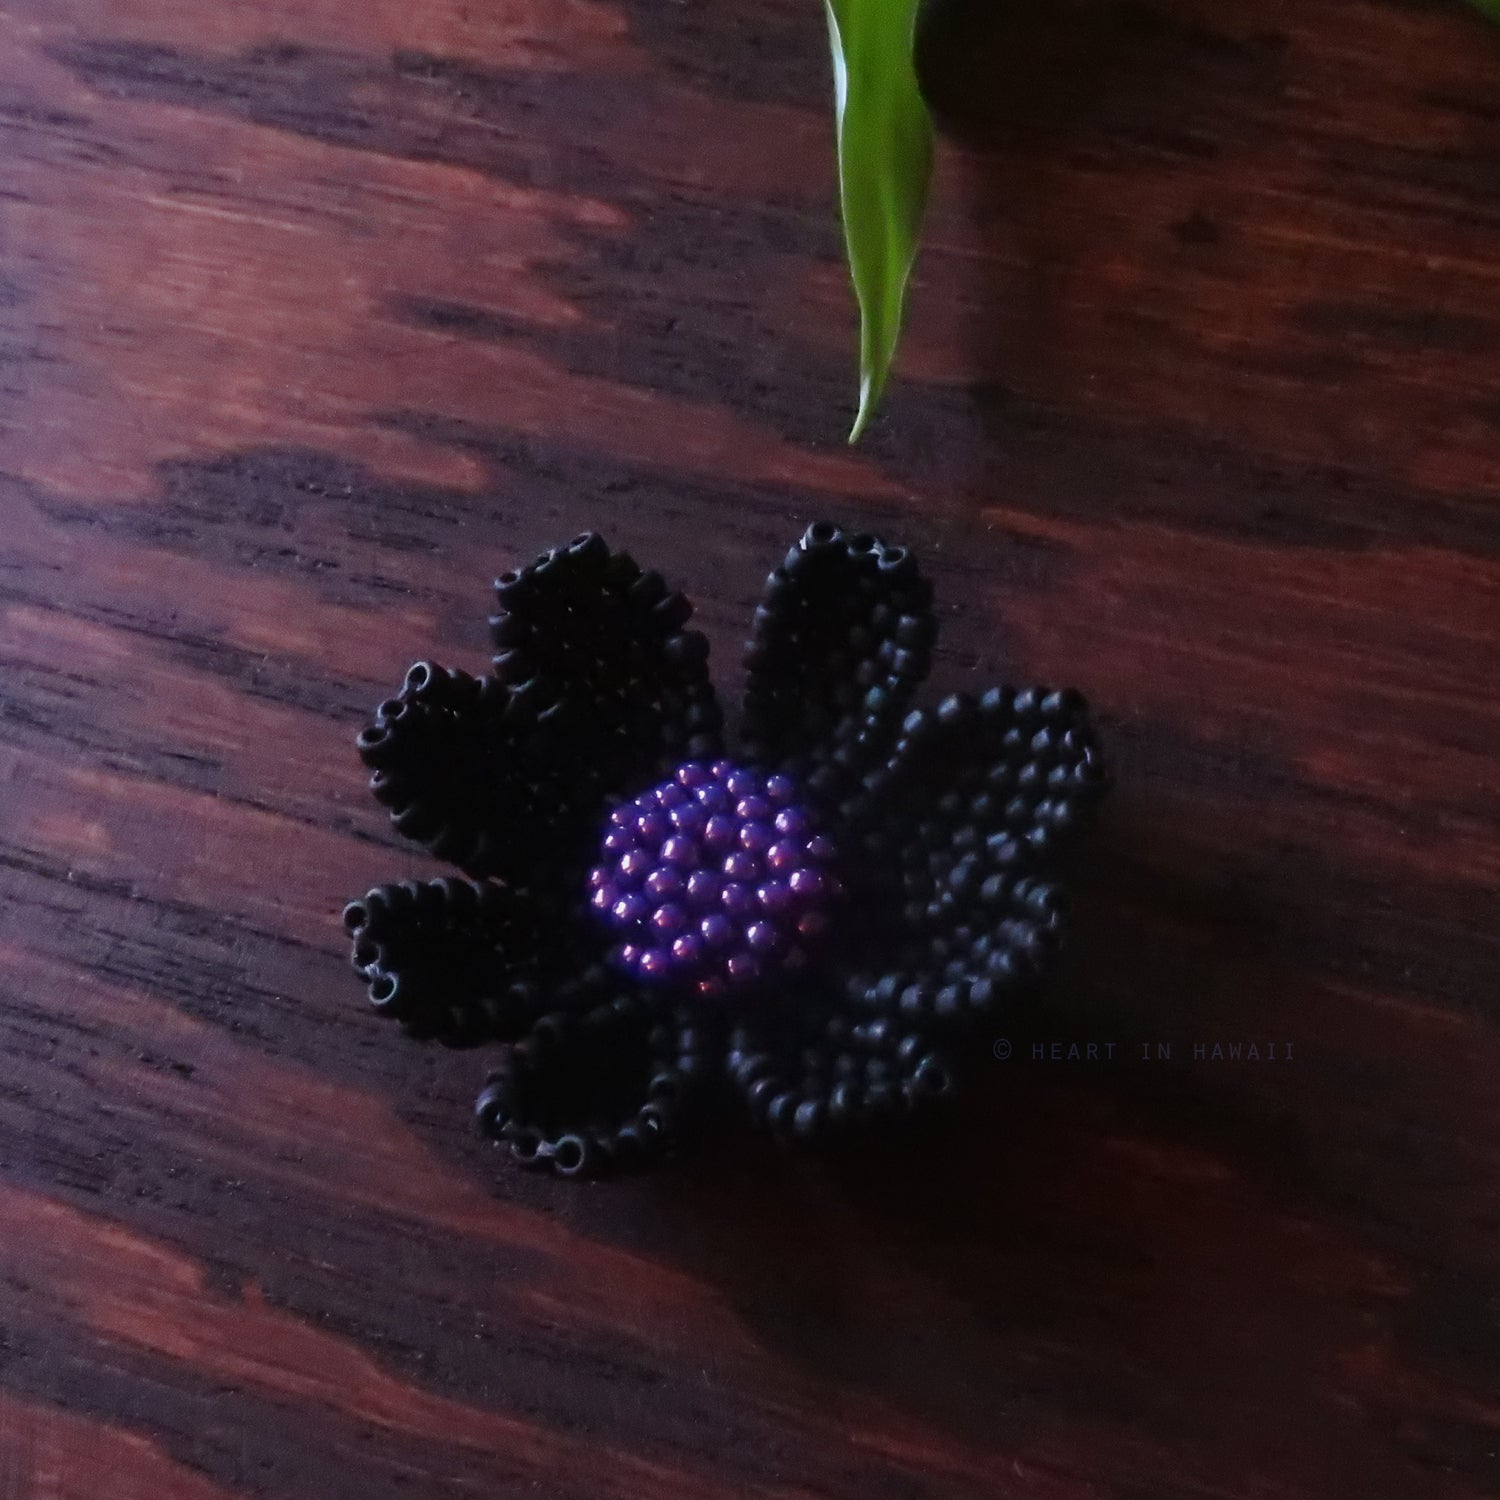 Heart in Hawaii Beaded Cosmos Flower Brooch - Matte Black and Galactic Purple